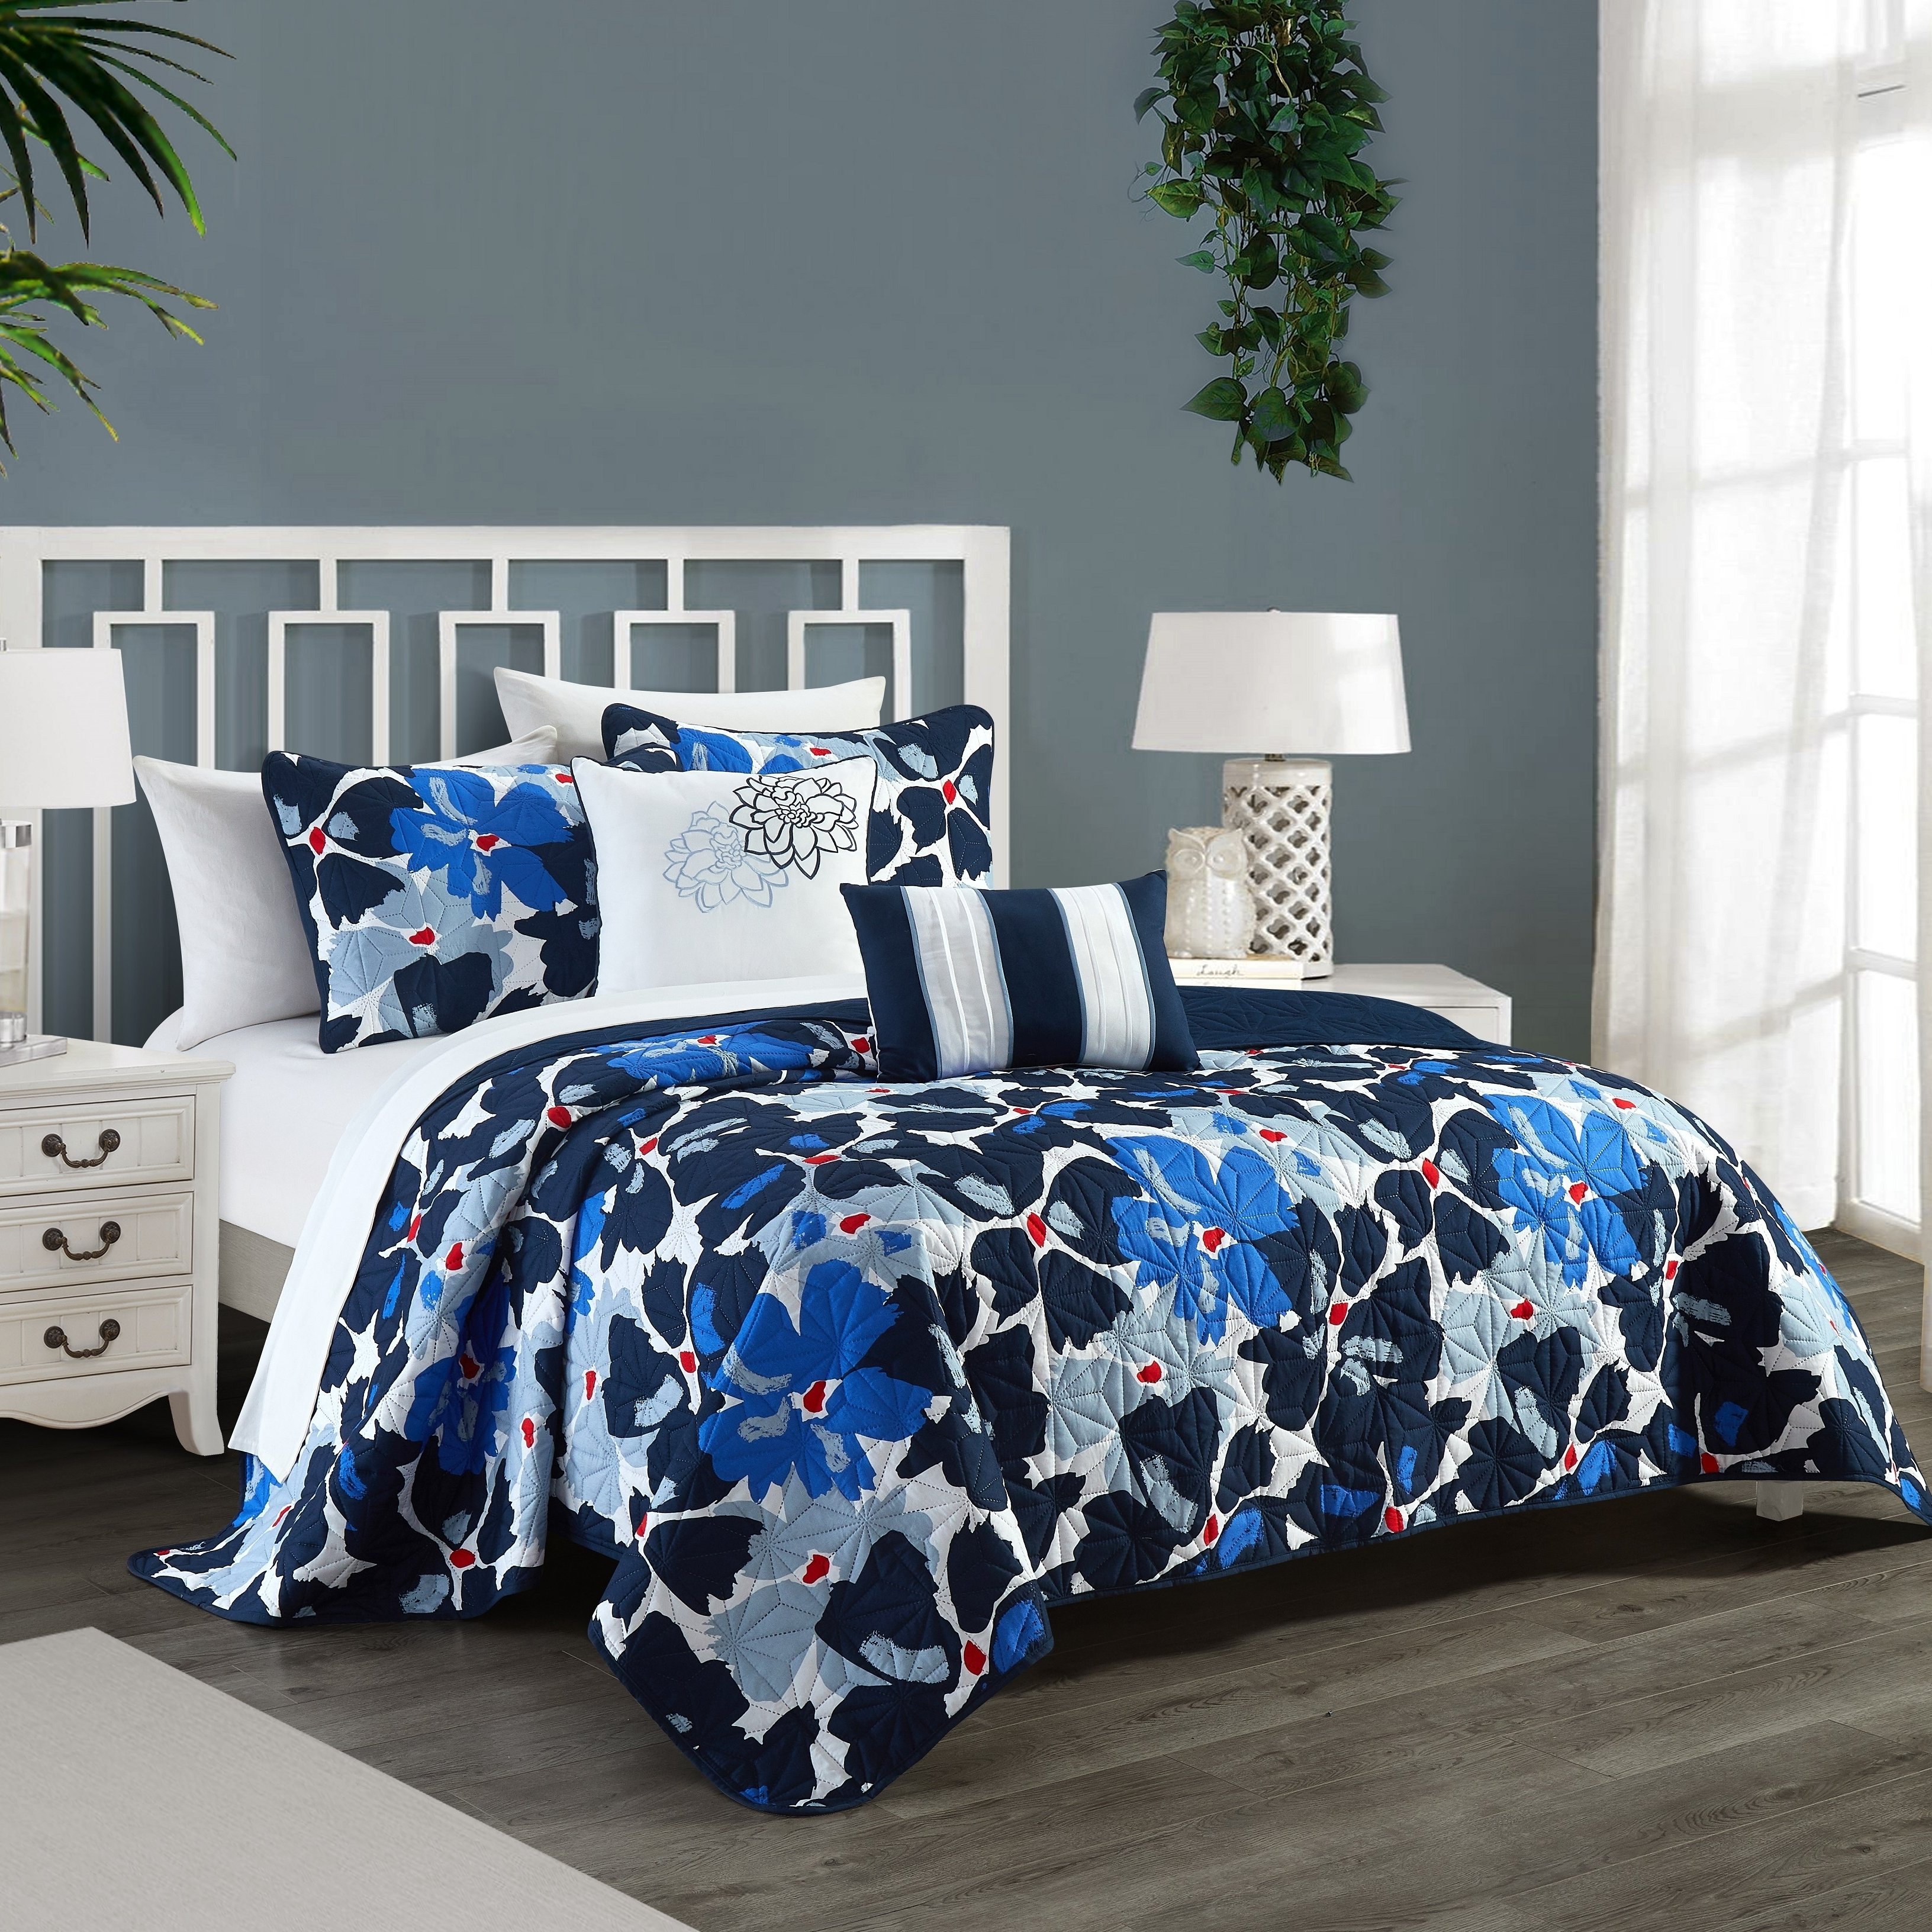 Aster 5 Piece Quilt Set Contemporary Floral Design Bedding - Blue, Queen